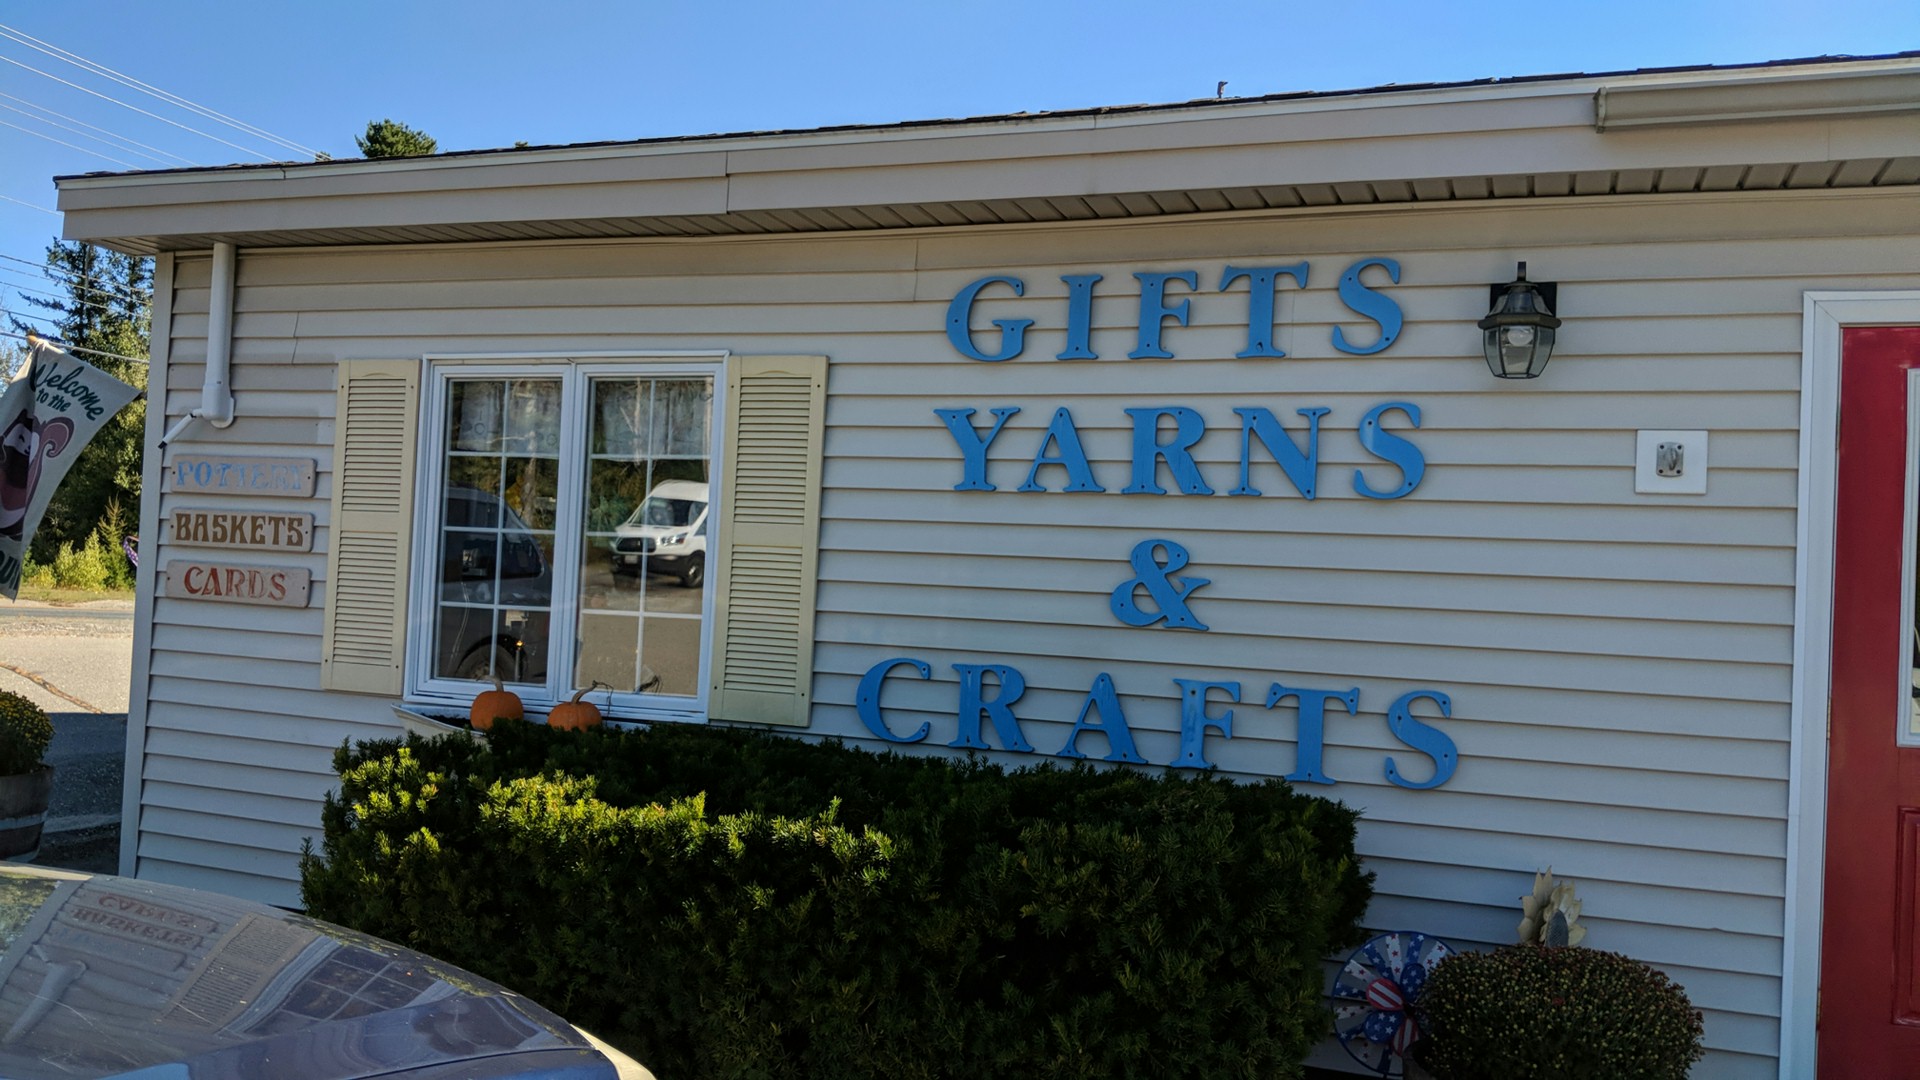 Shirley's Yarns Crafts & Gifts